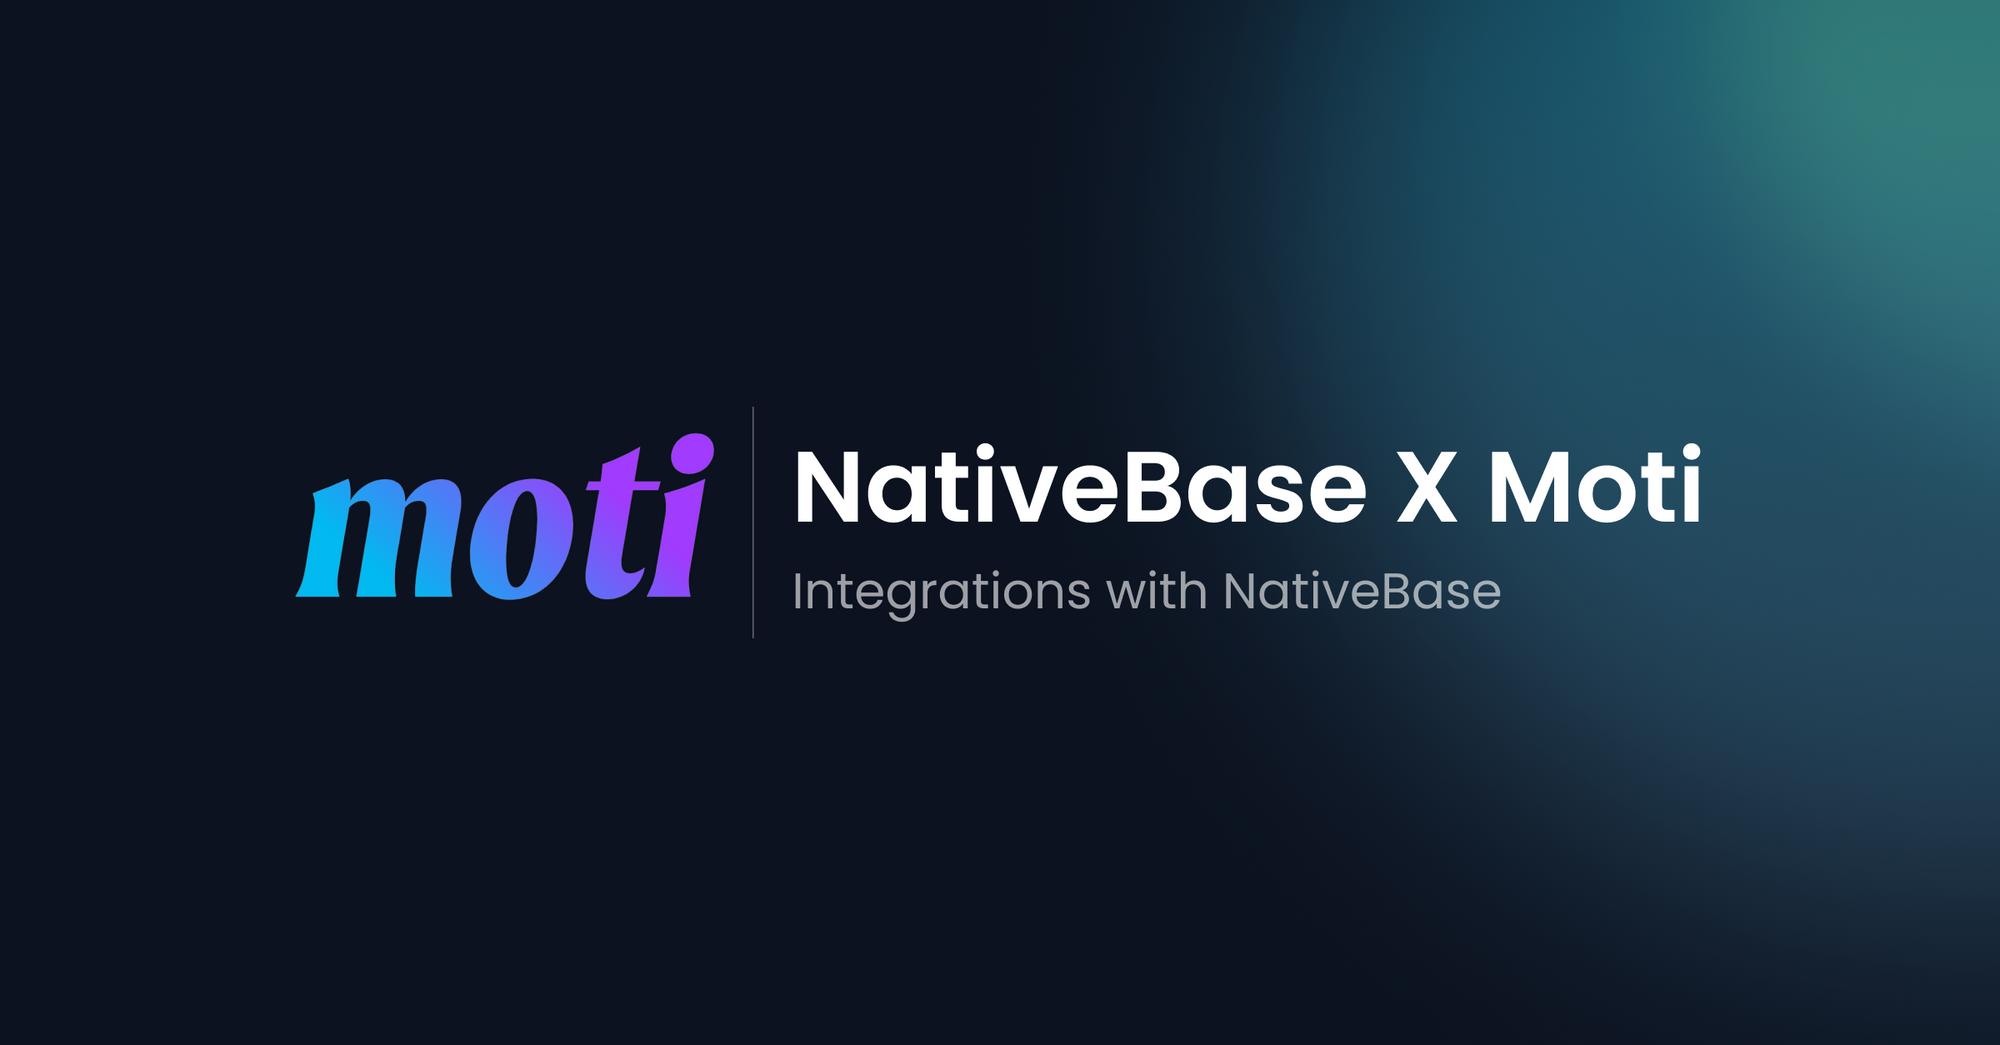 NativeBase X Moti